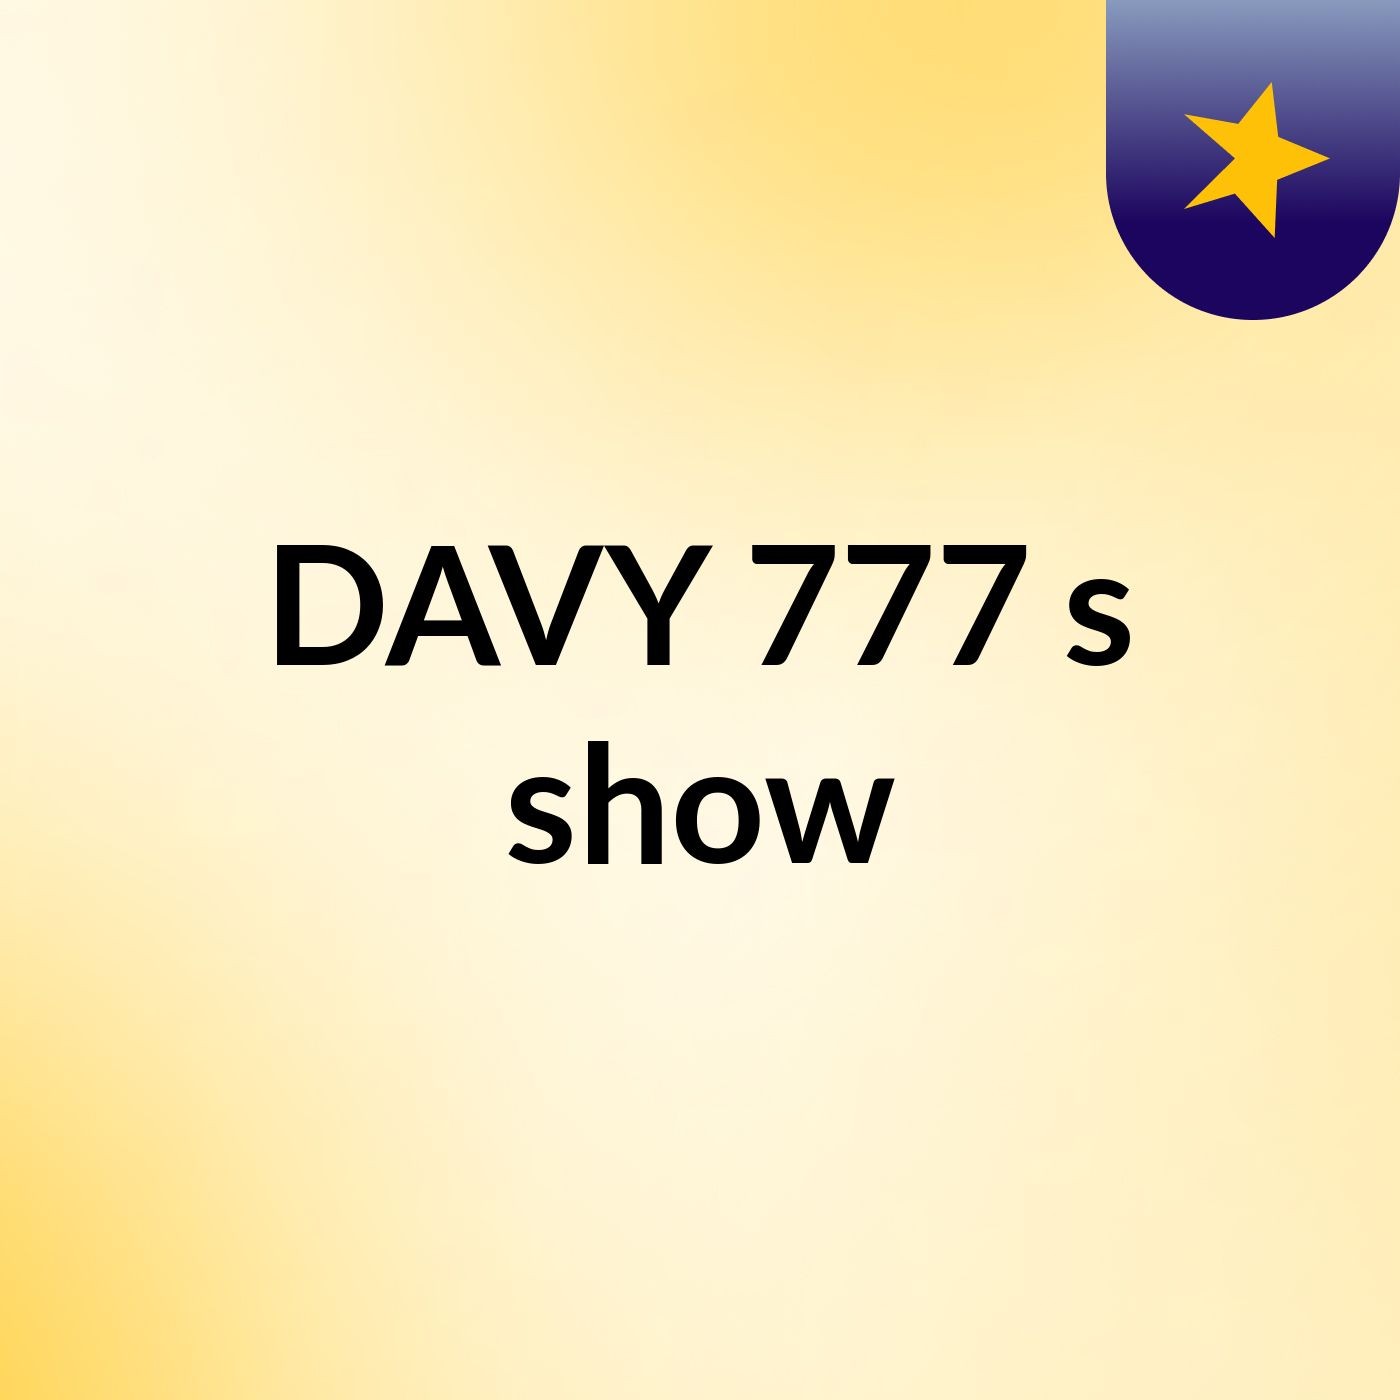 DAVY 777's show